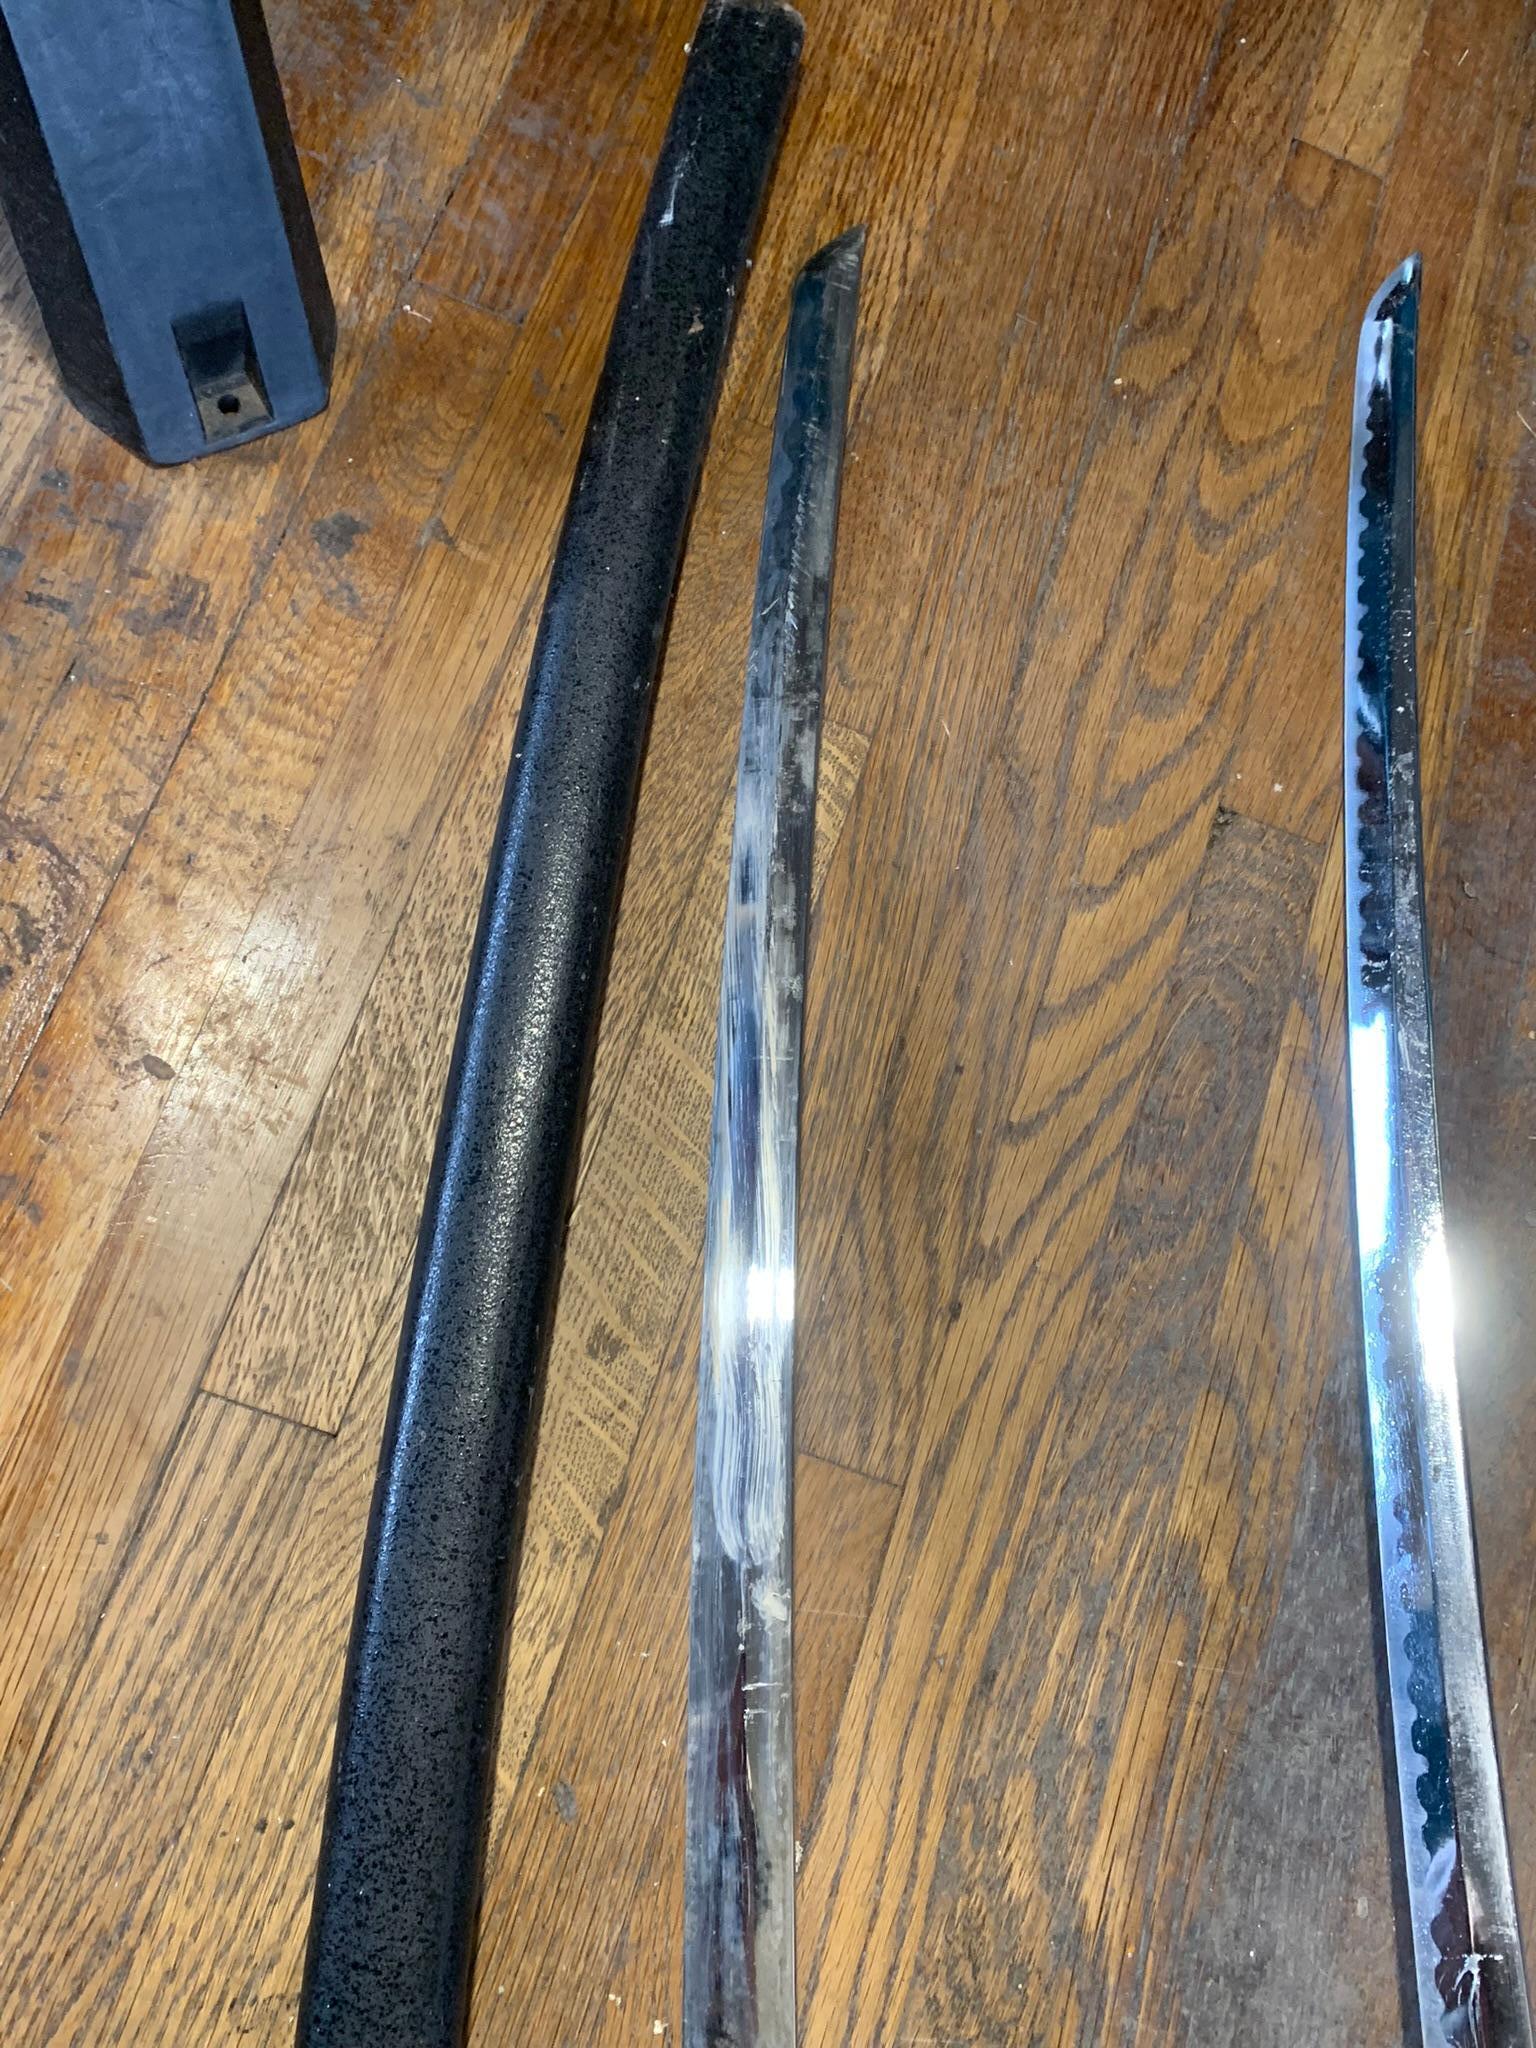 Novelty Samurai Style Swords